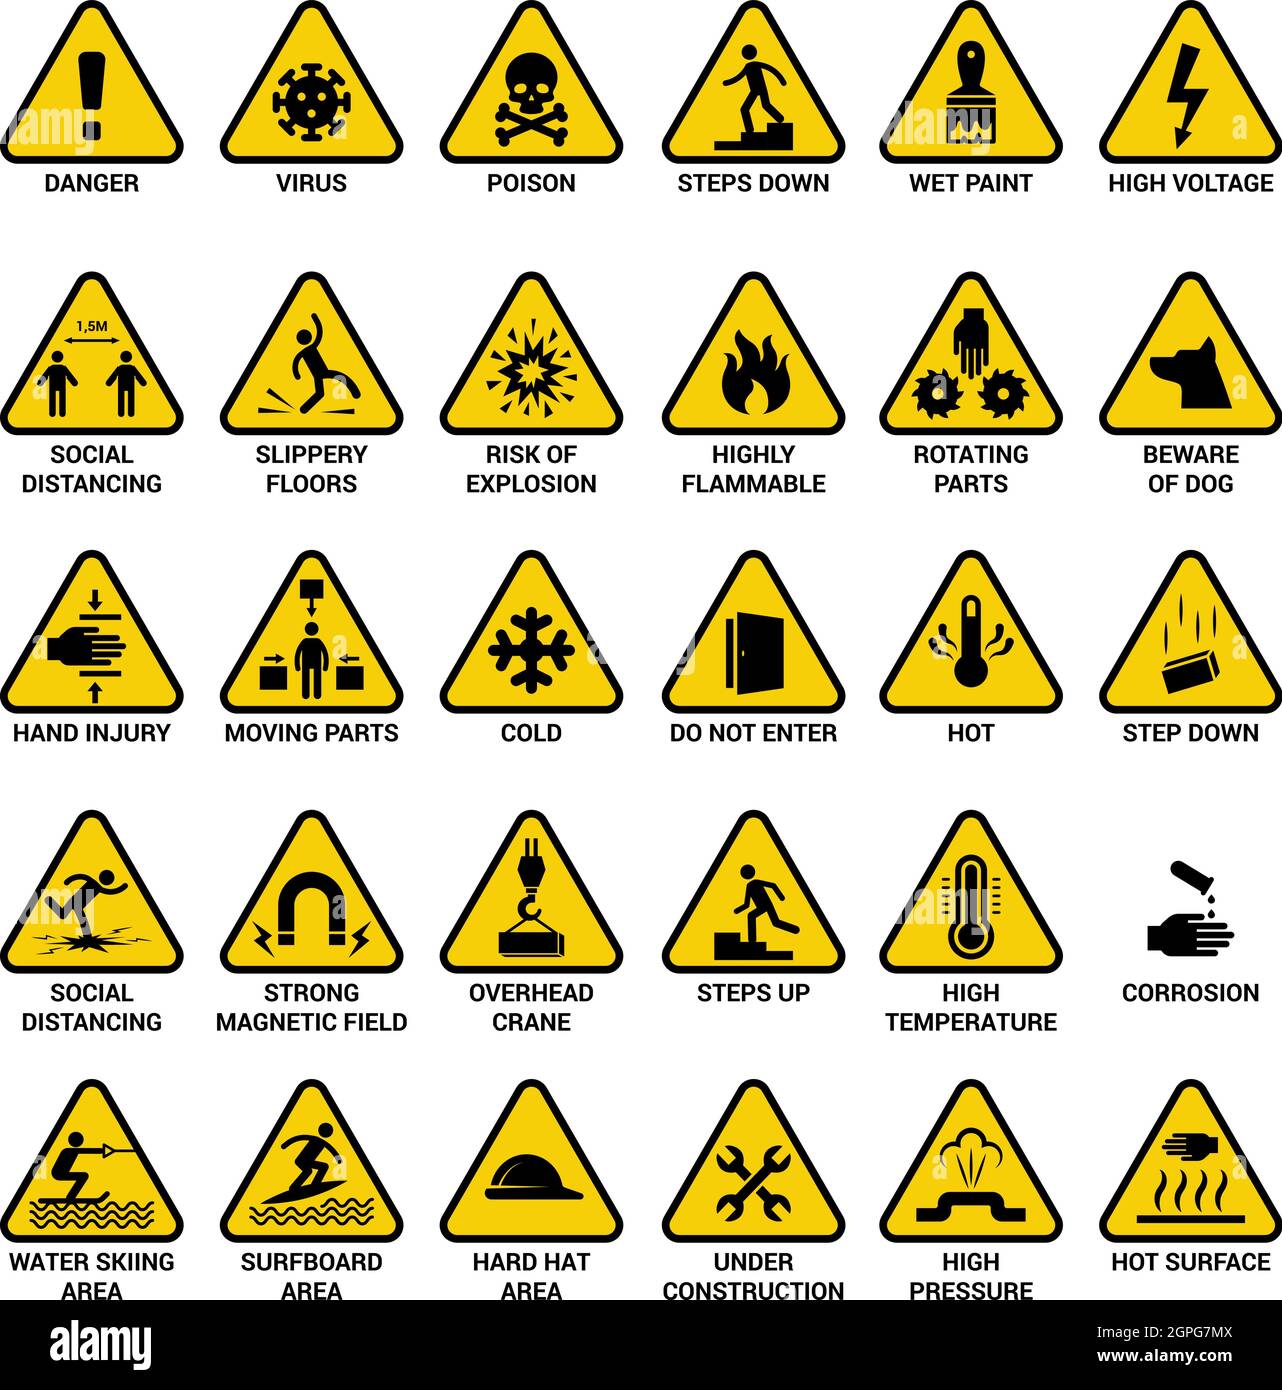 Electrical Safety Symbols